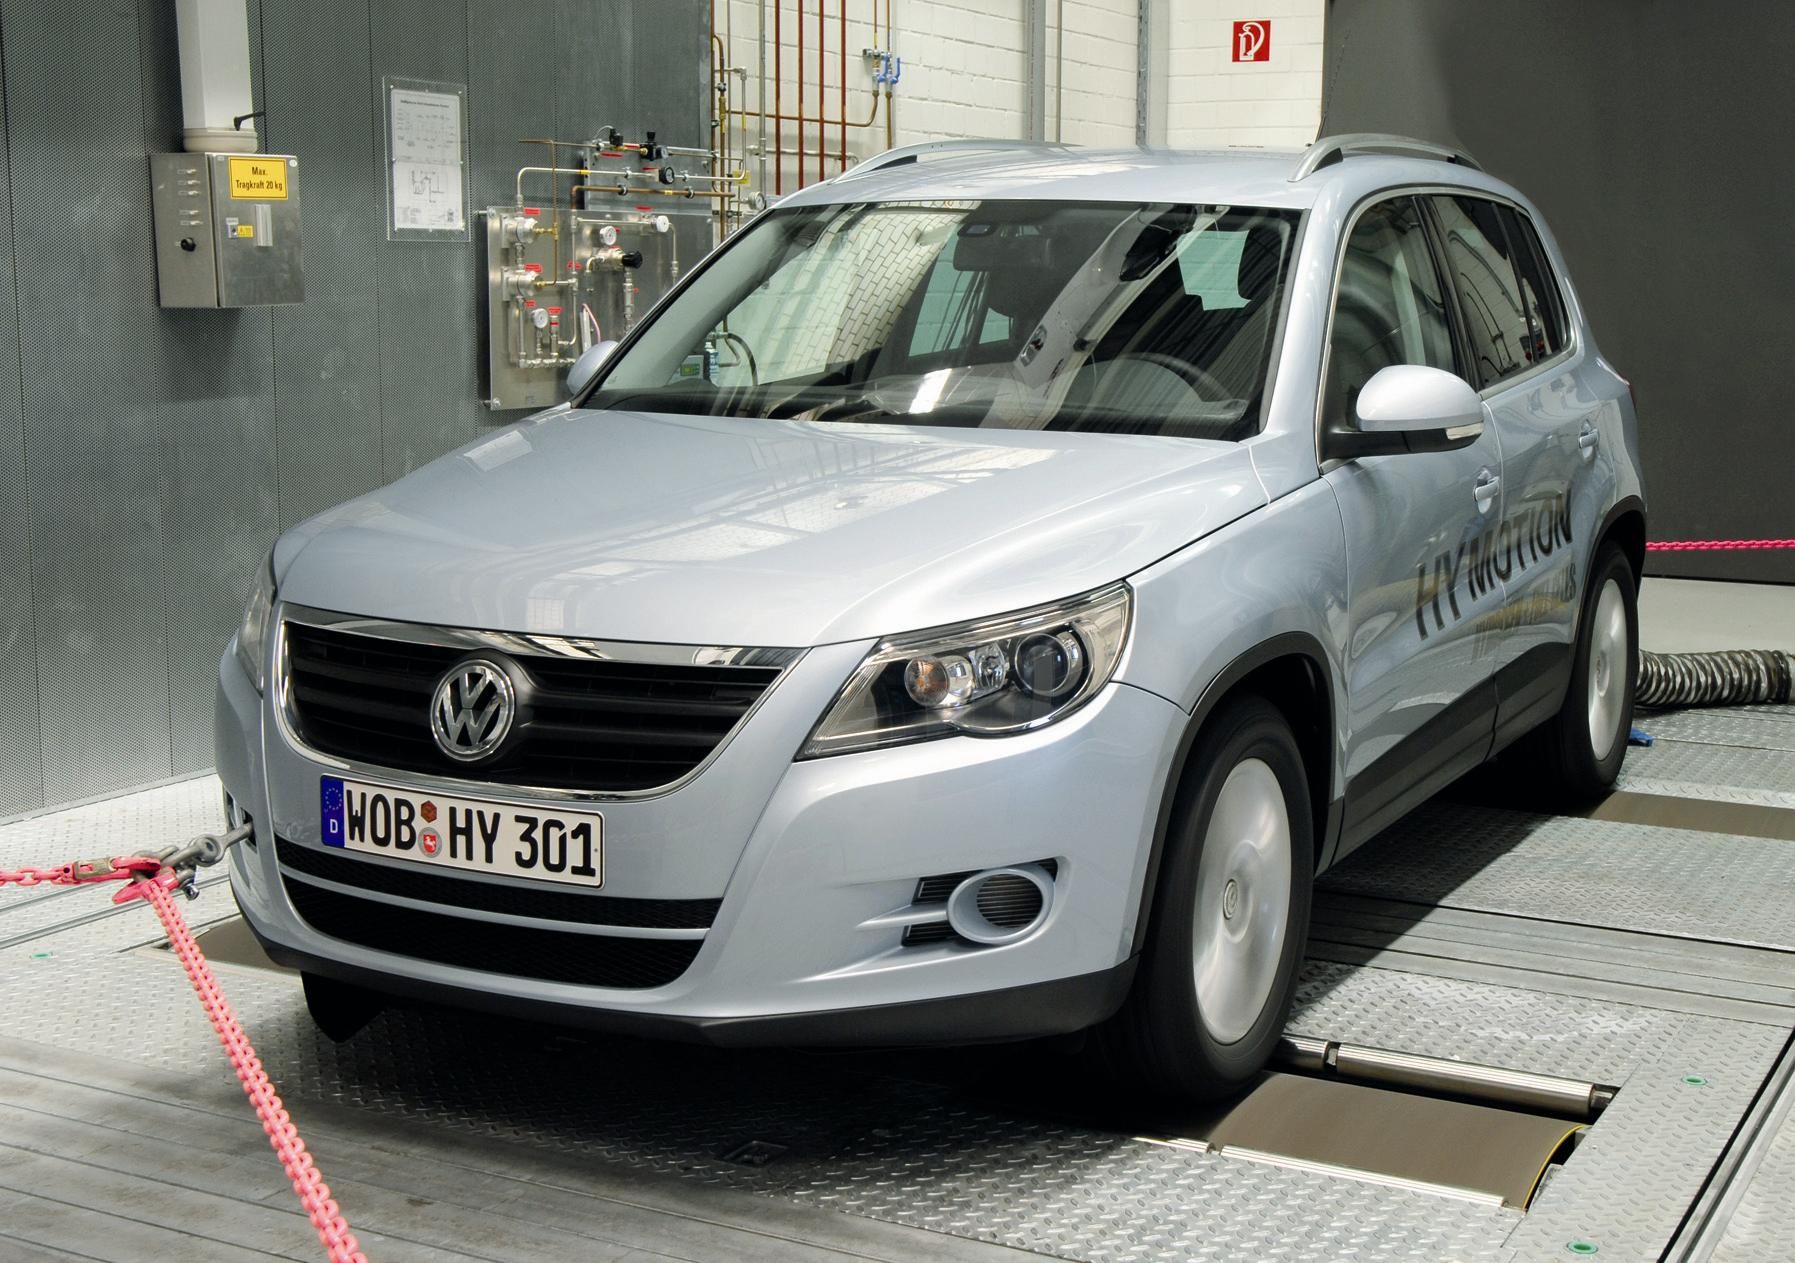 2007 Volkswagen Tiguan HyMotion